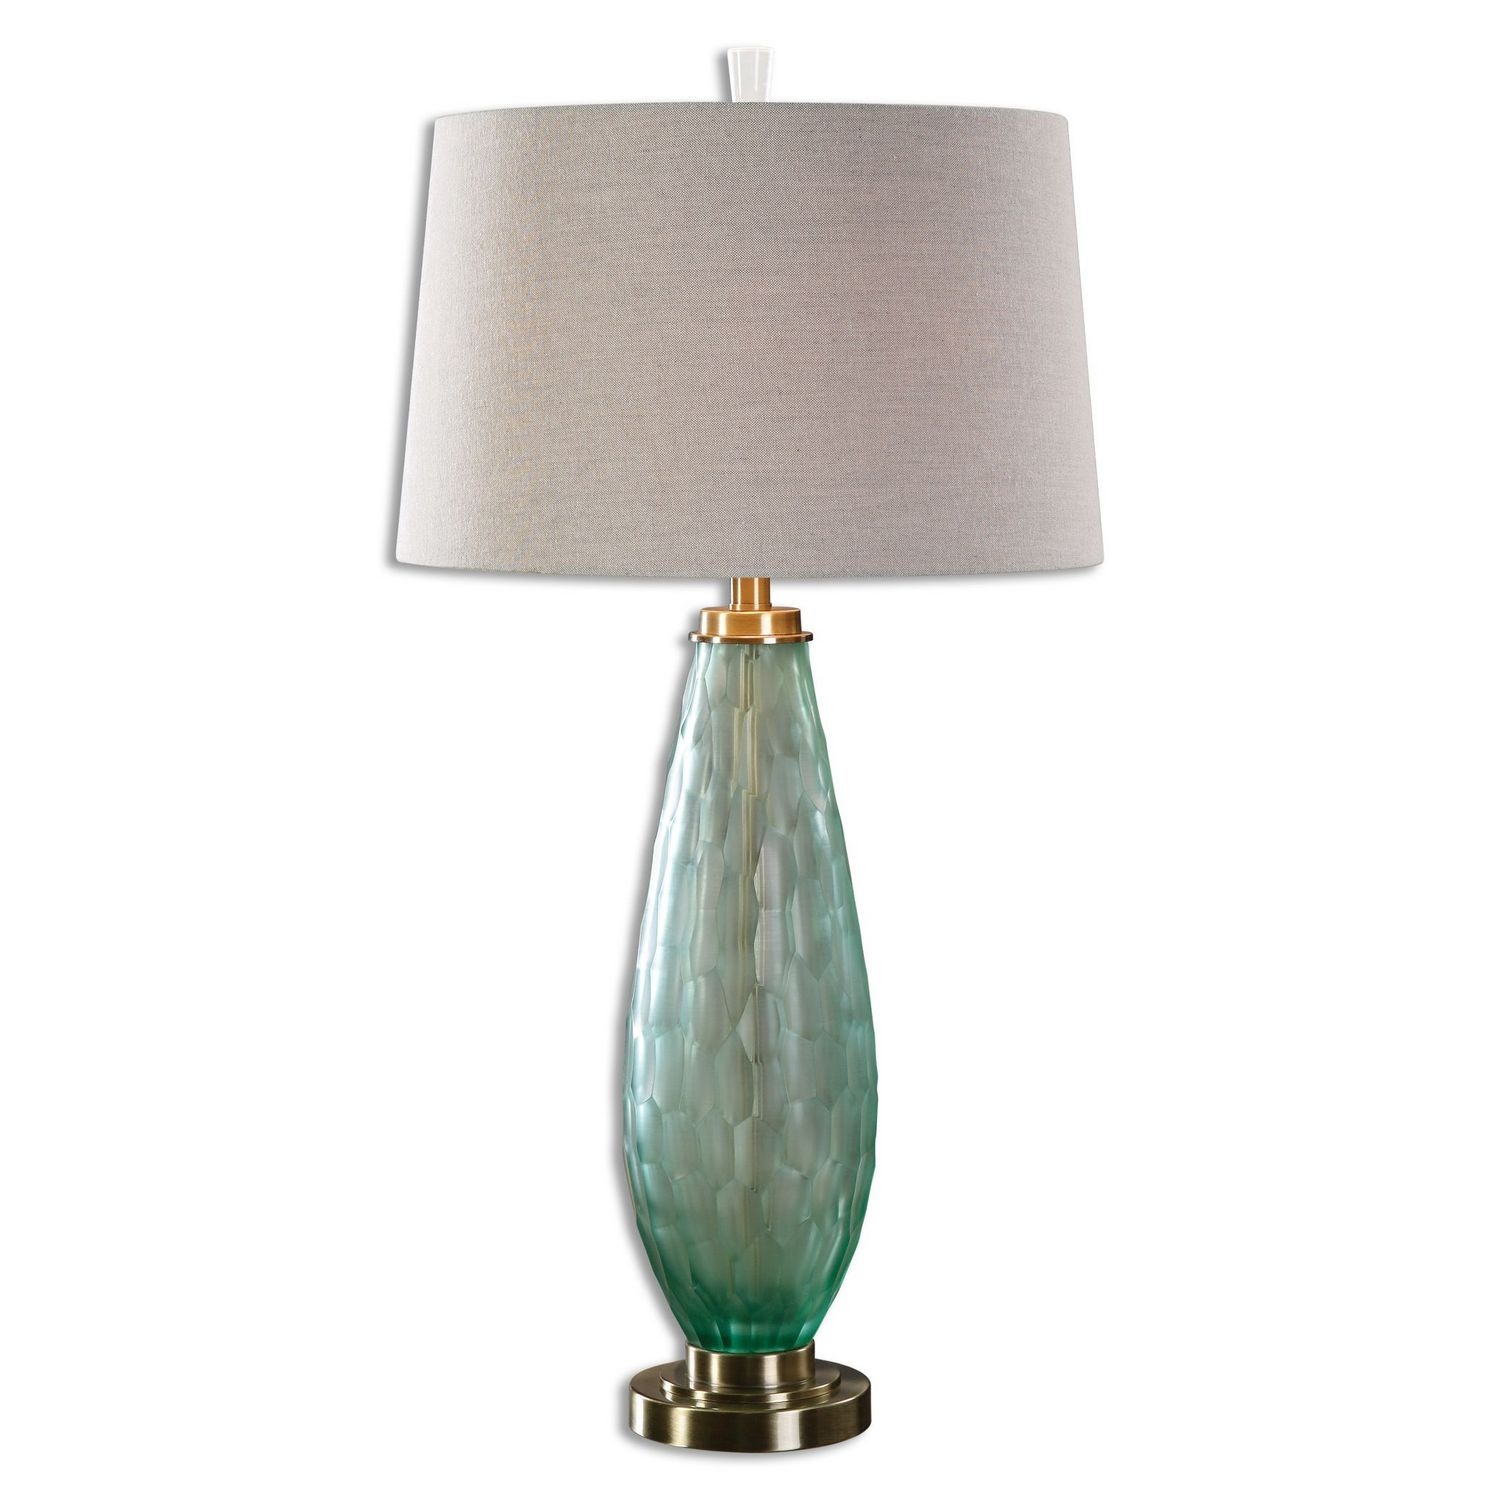 Uttermost Lenado Glass Table Lamp - Sea Green